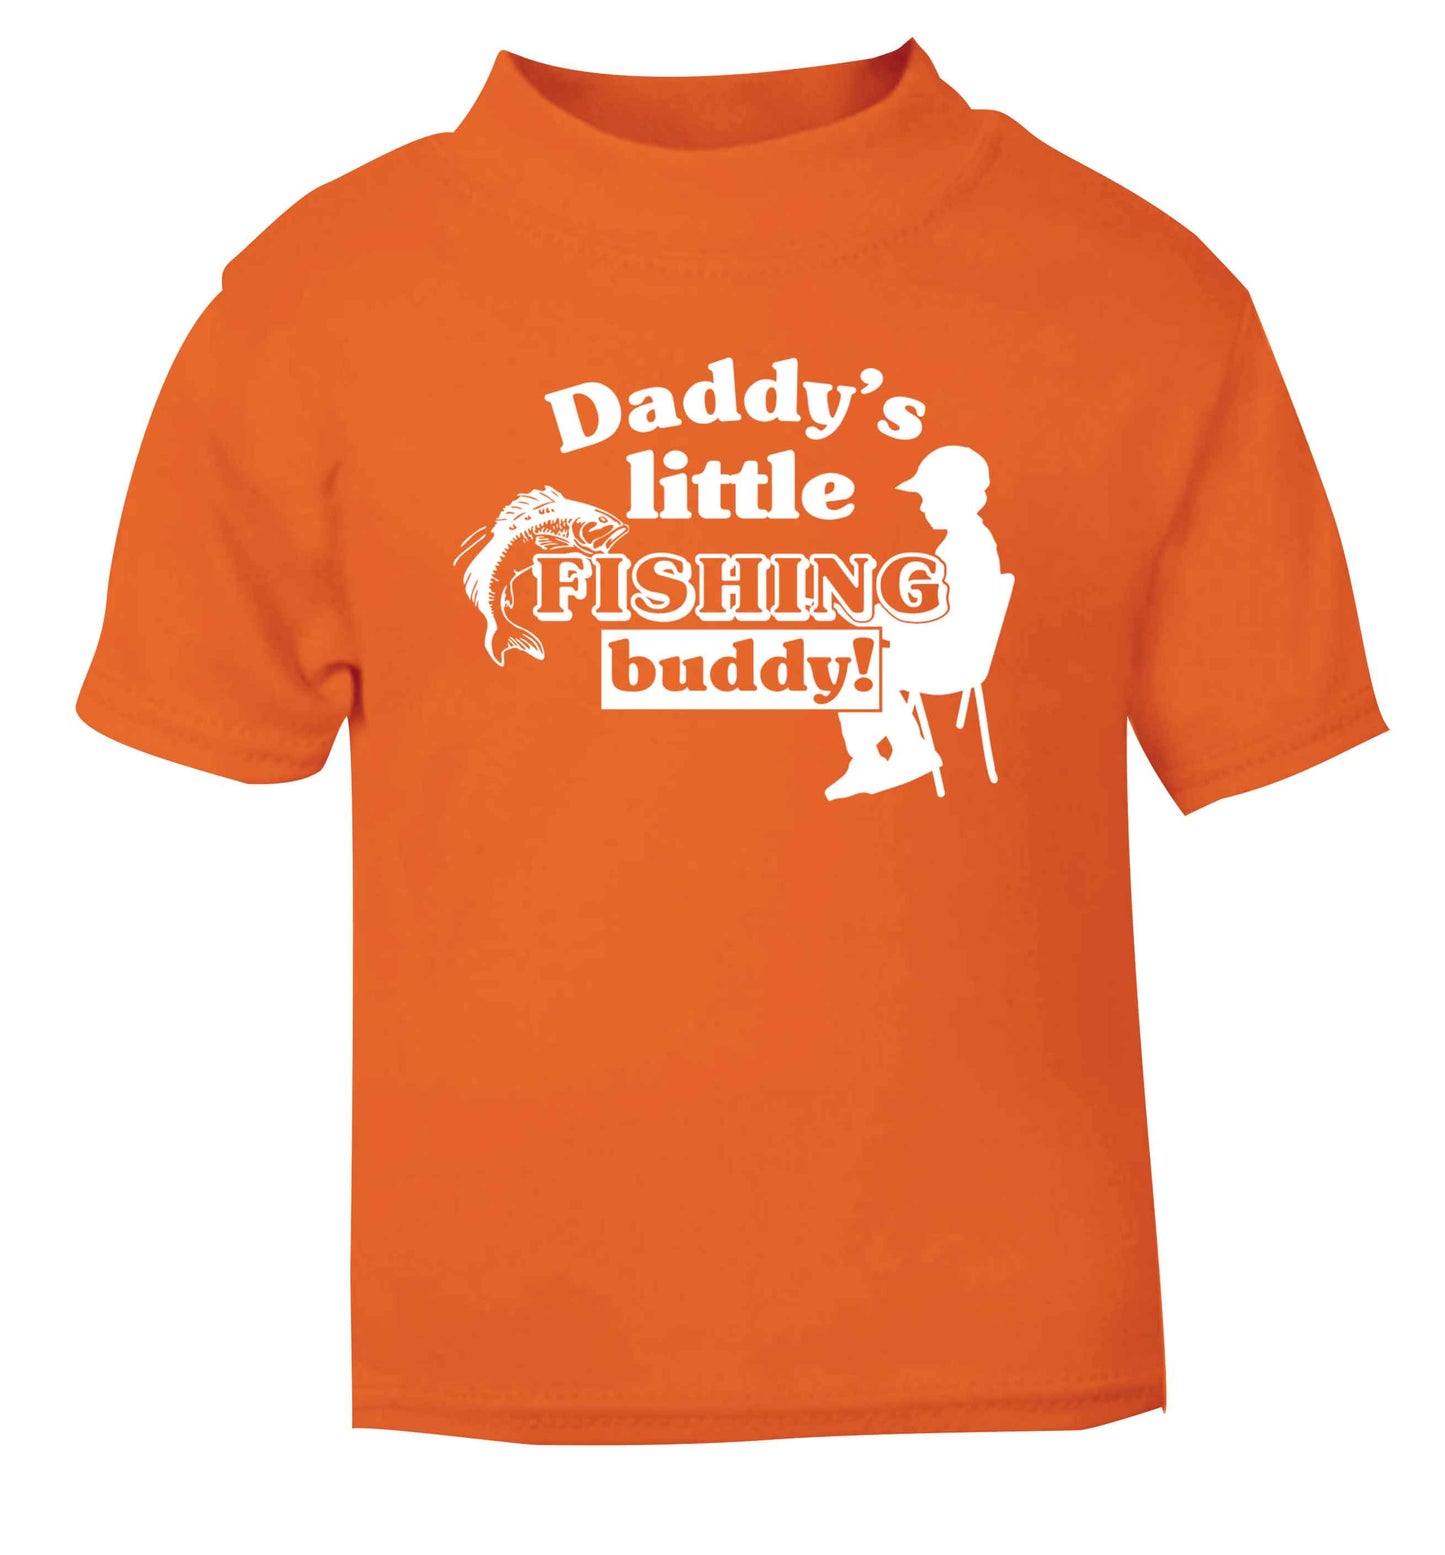 Daddy's little fishing buddy orange Baby Toddler Tshirt 2 Years